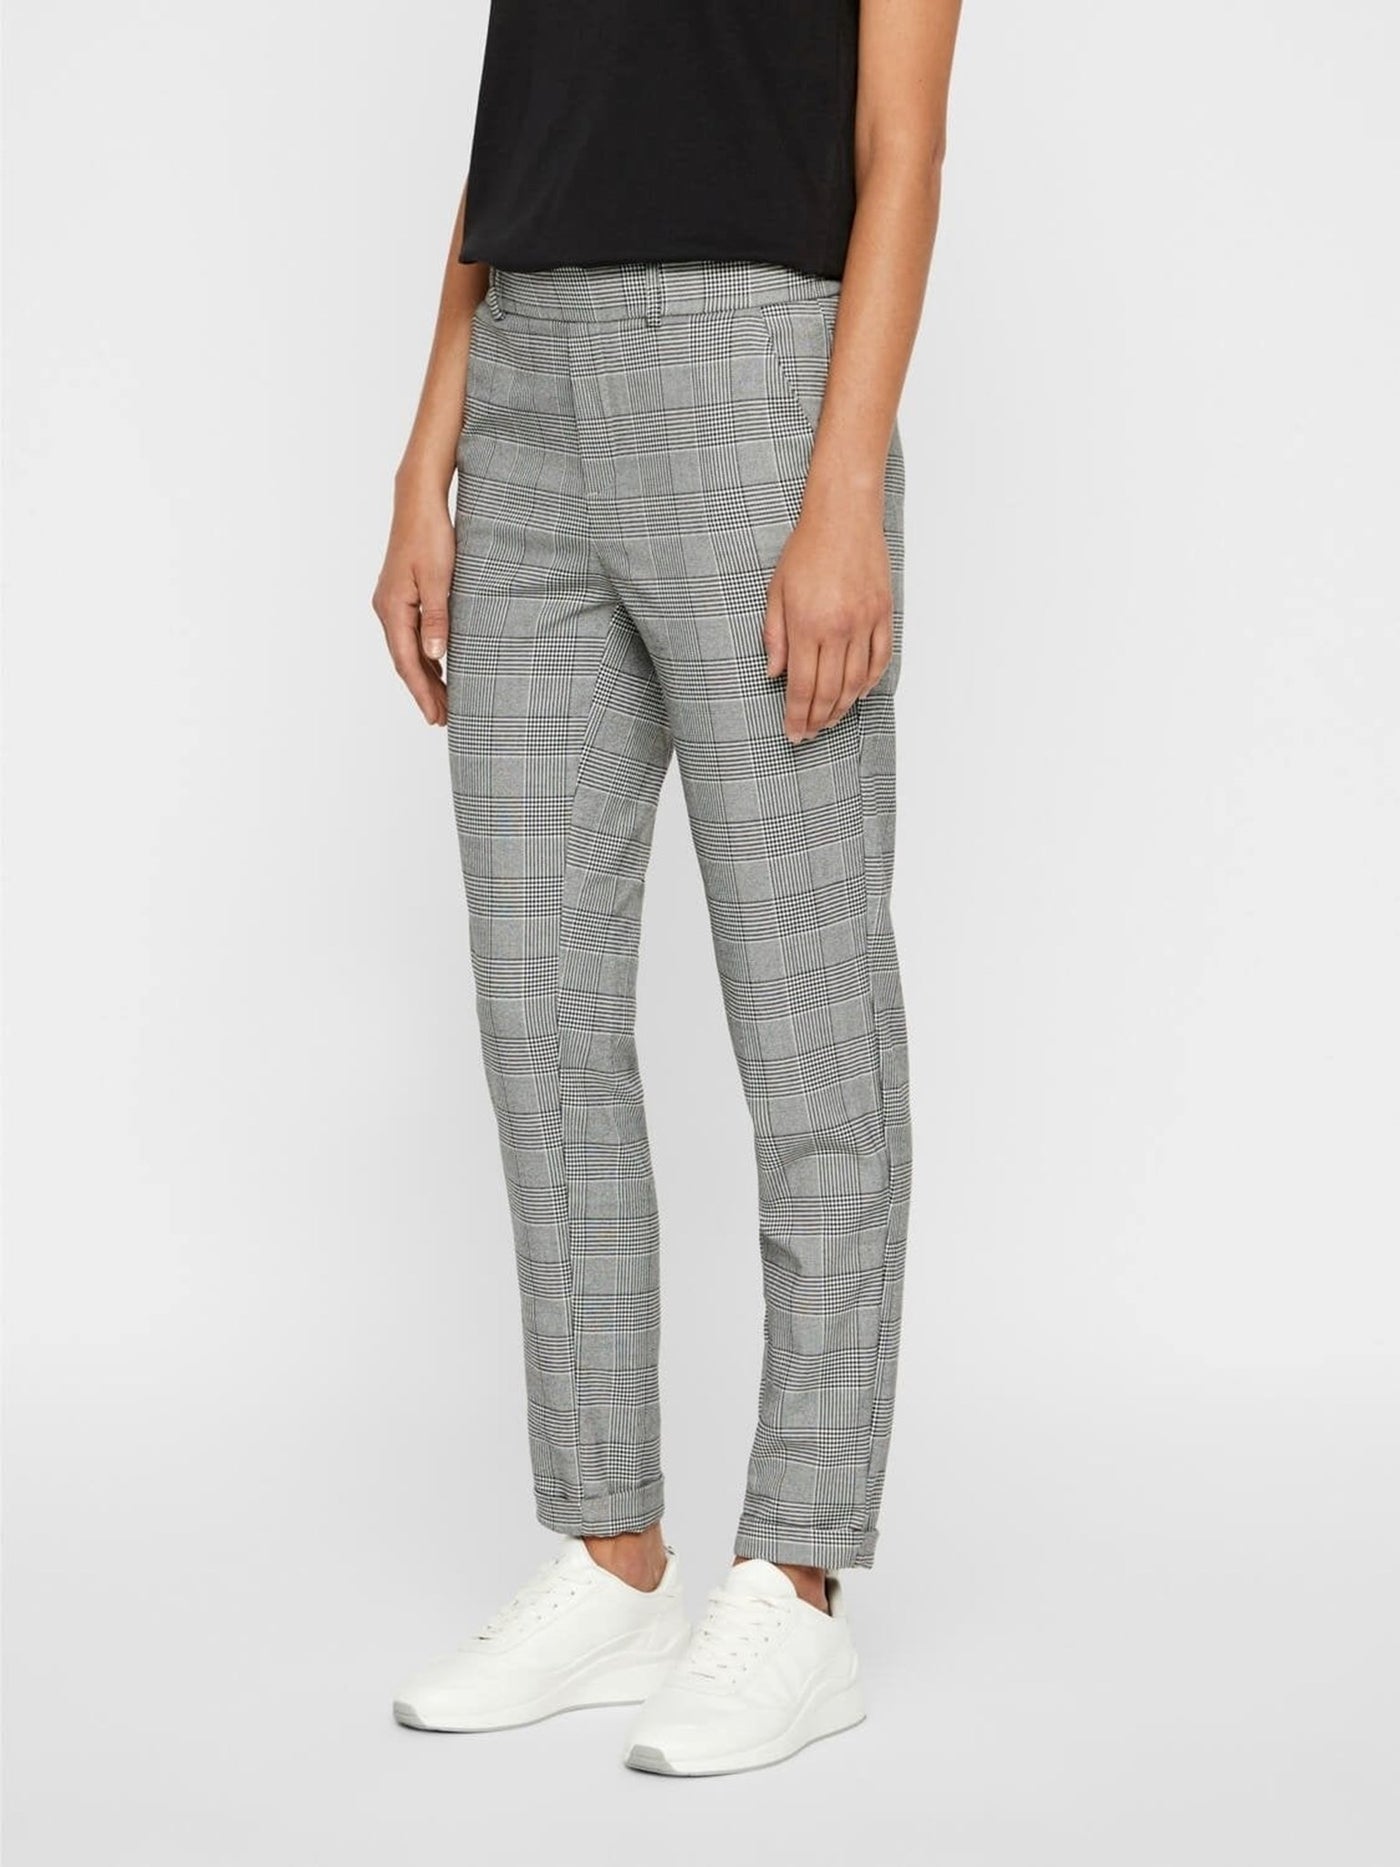 Maya Trousers with checks - Grey/White - Vero Moda - Grey